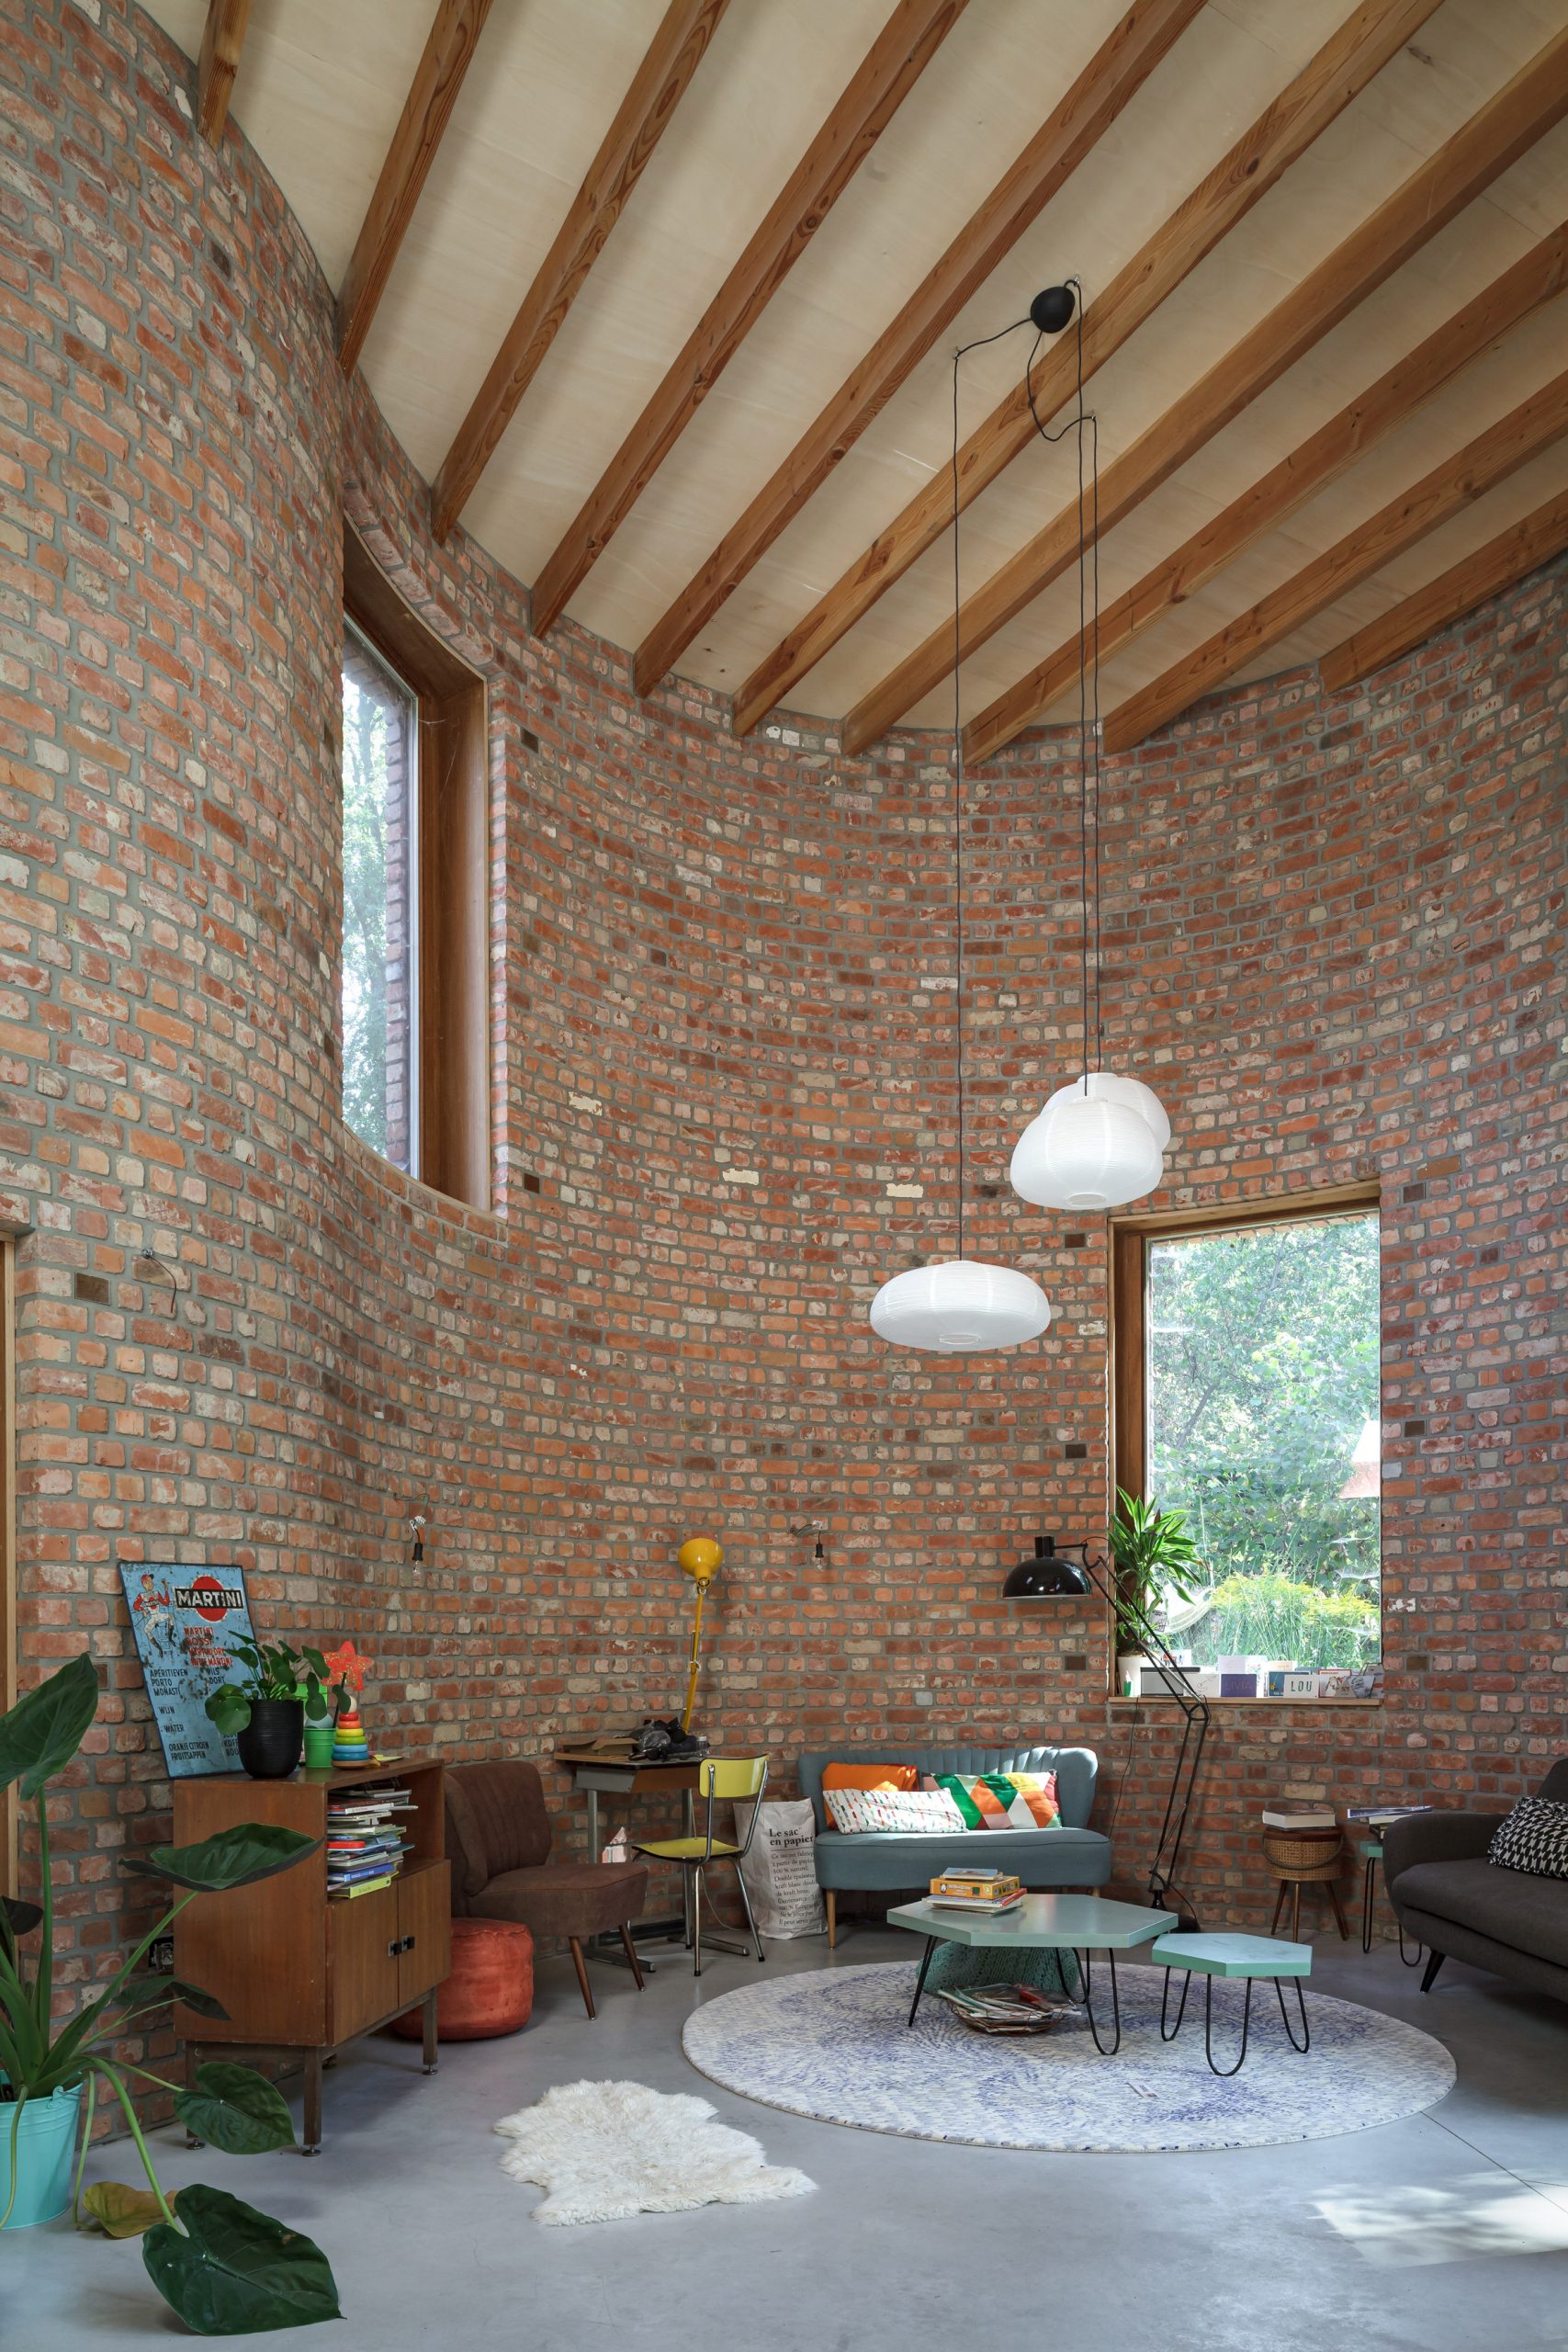 GjG House built of reclaimed bricks by BLAF Architecten in Ghent, Belgium